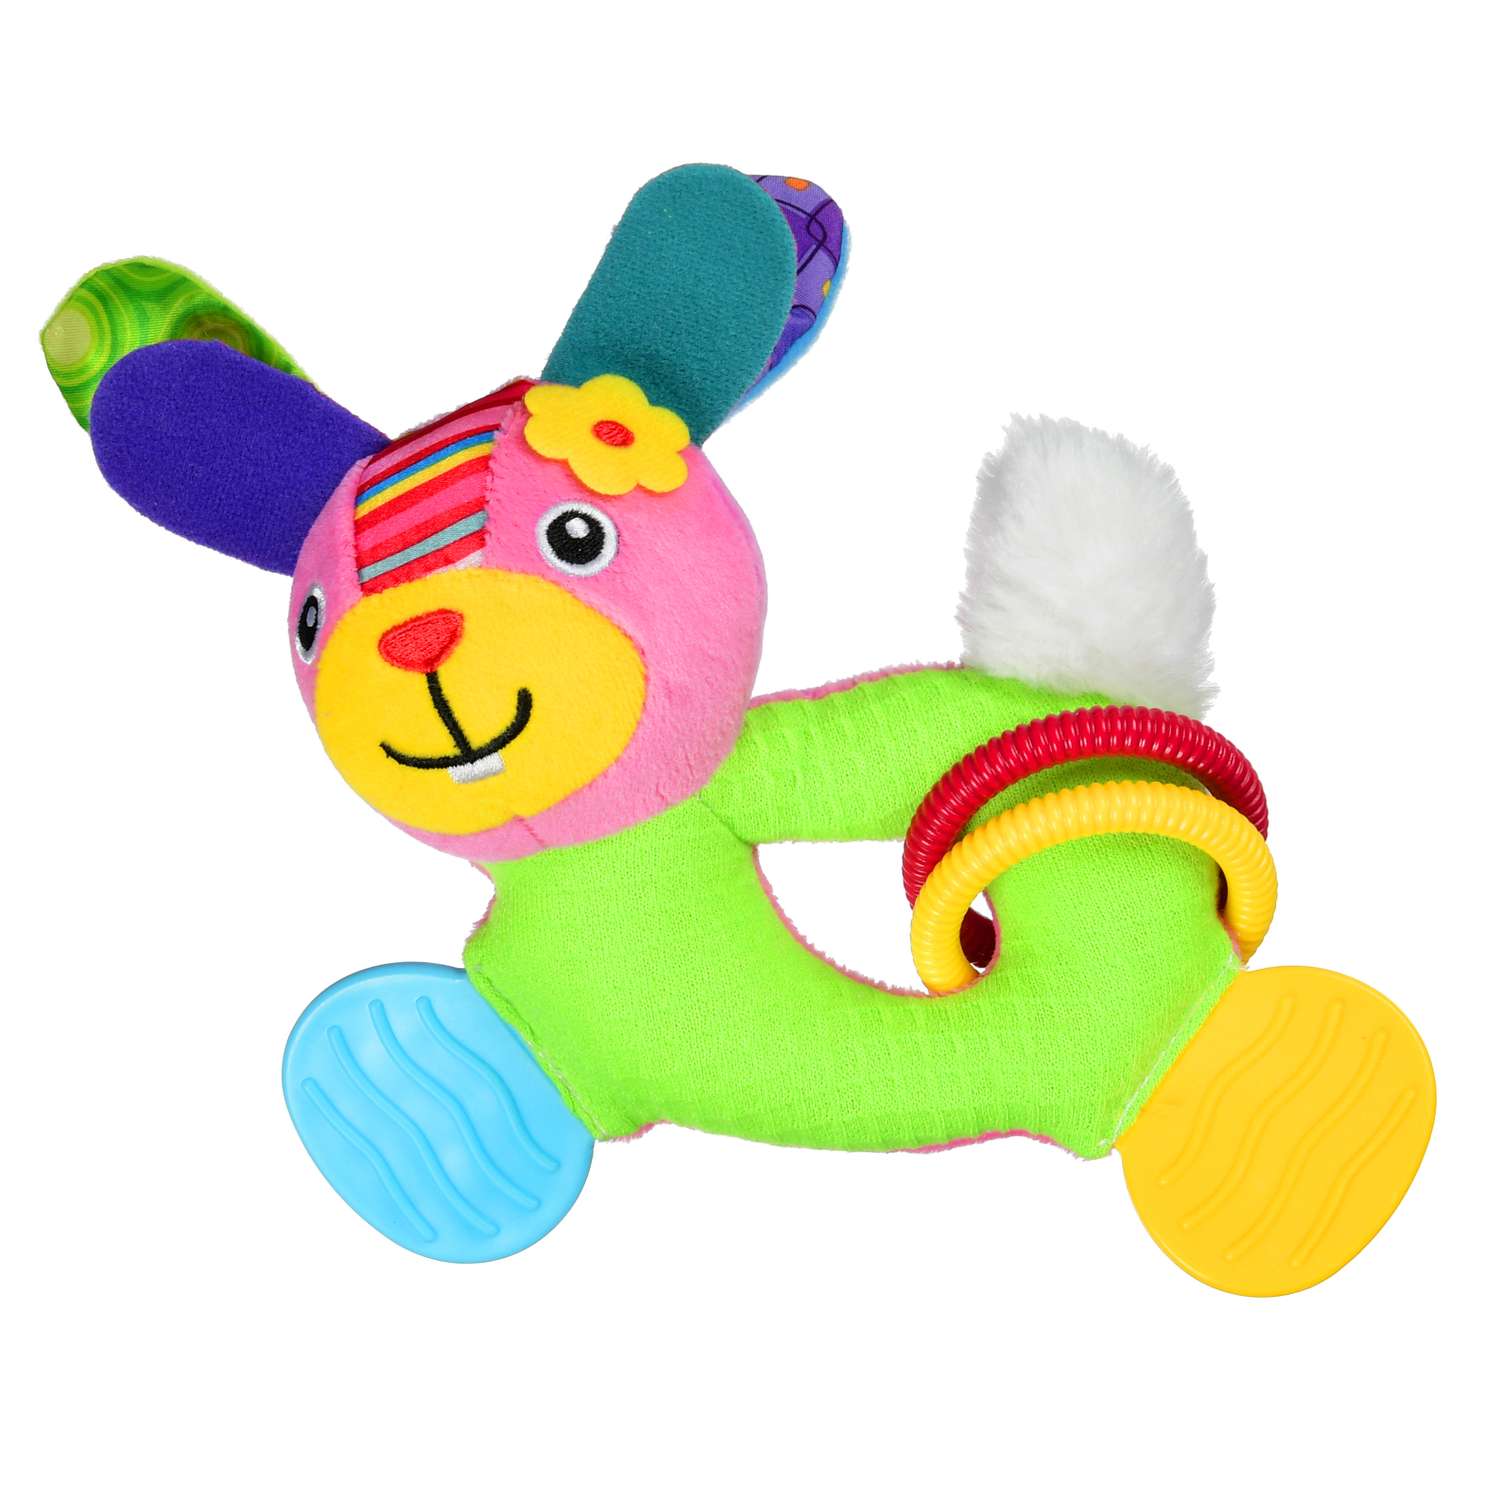 Мягкая игрушка Uviton с прорезывателем и погремушкой Bright friend Собачка - фото 2